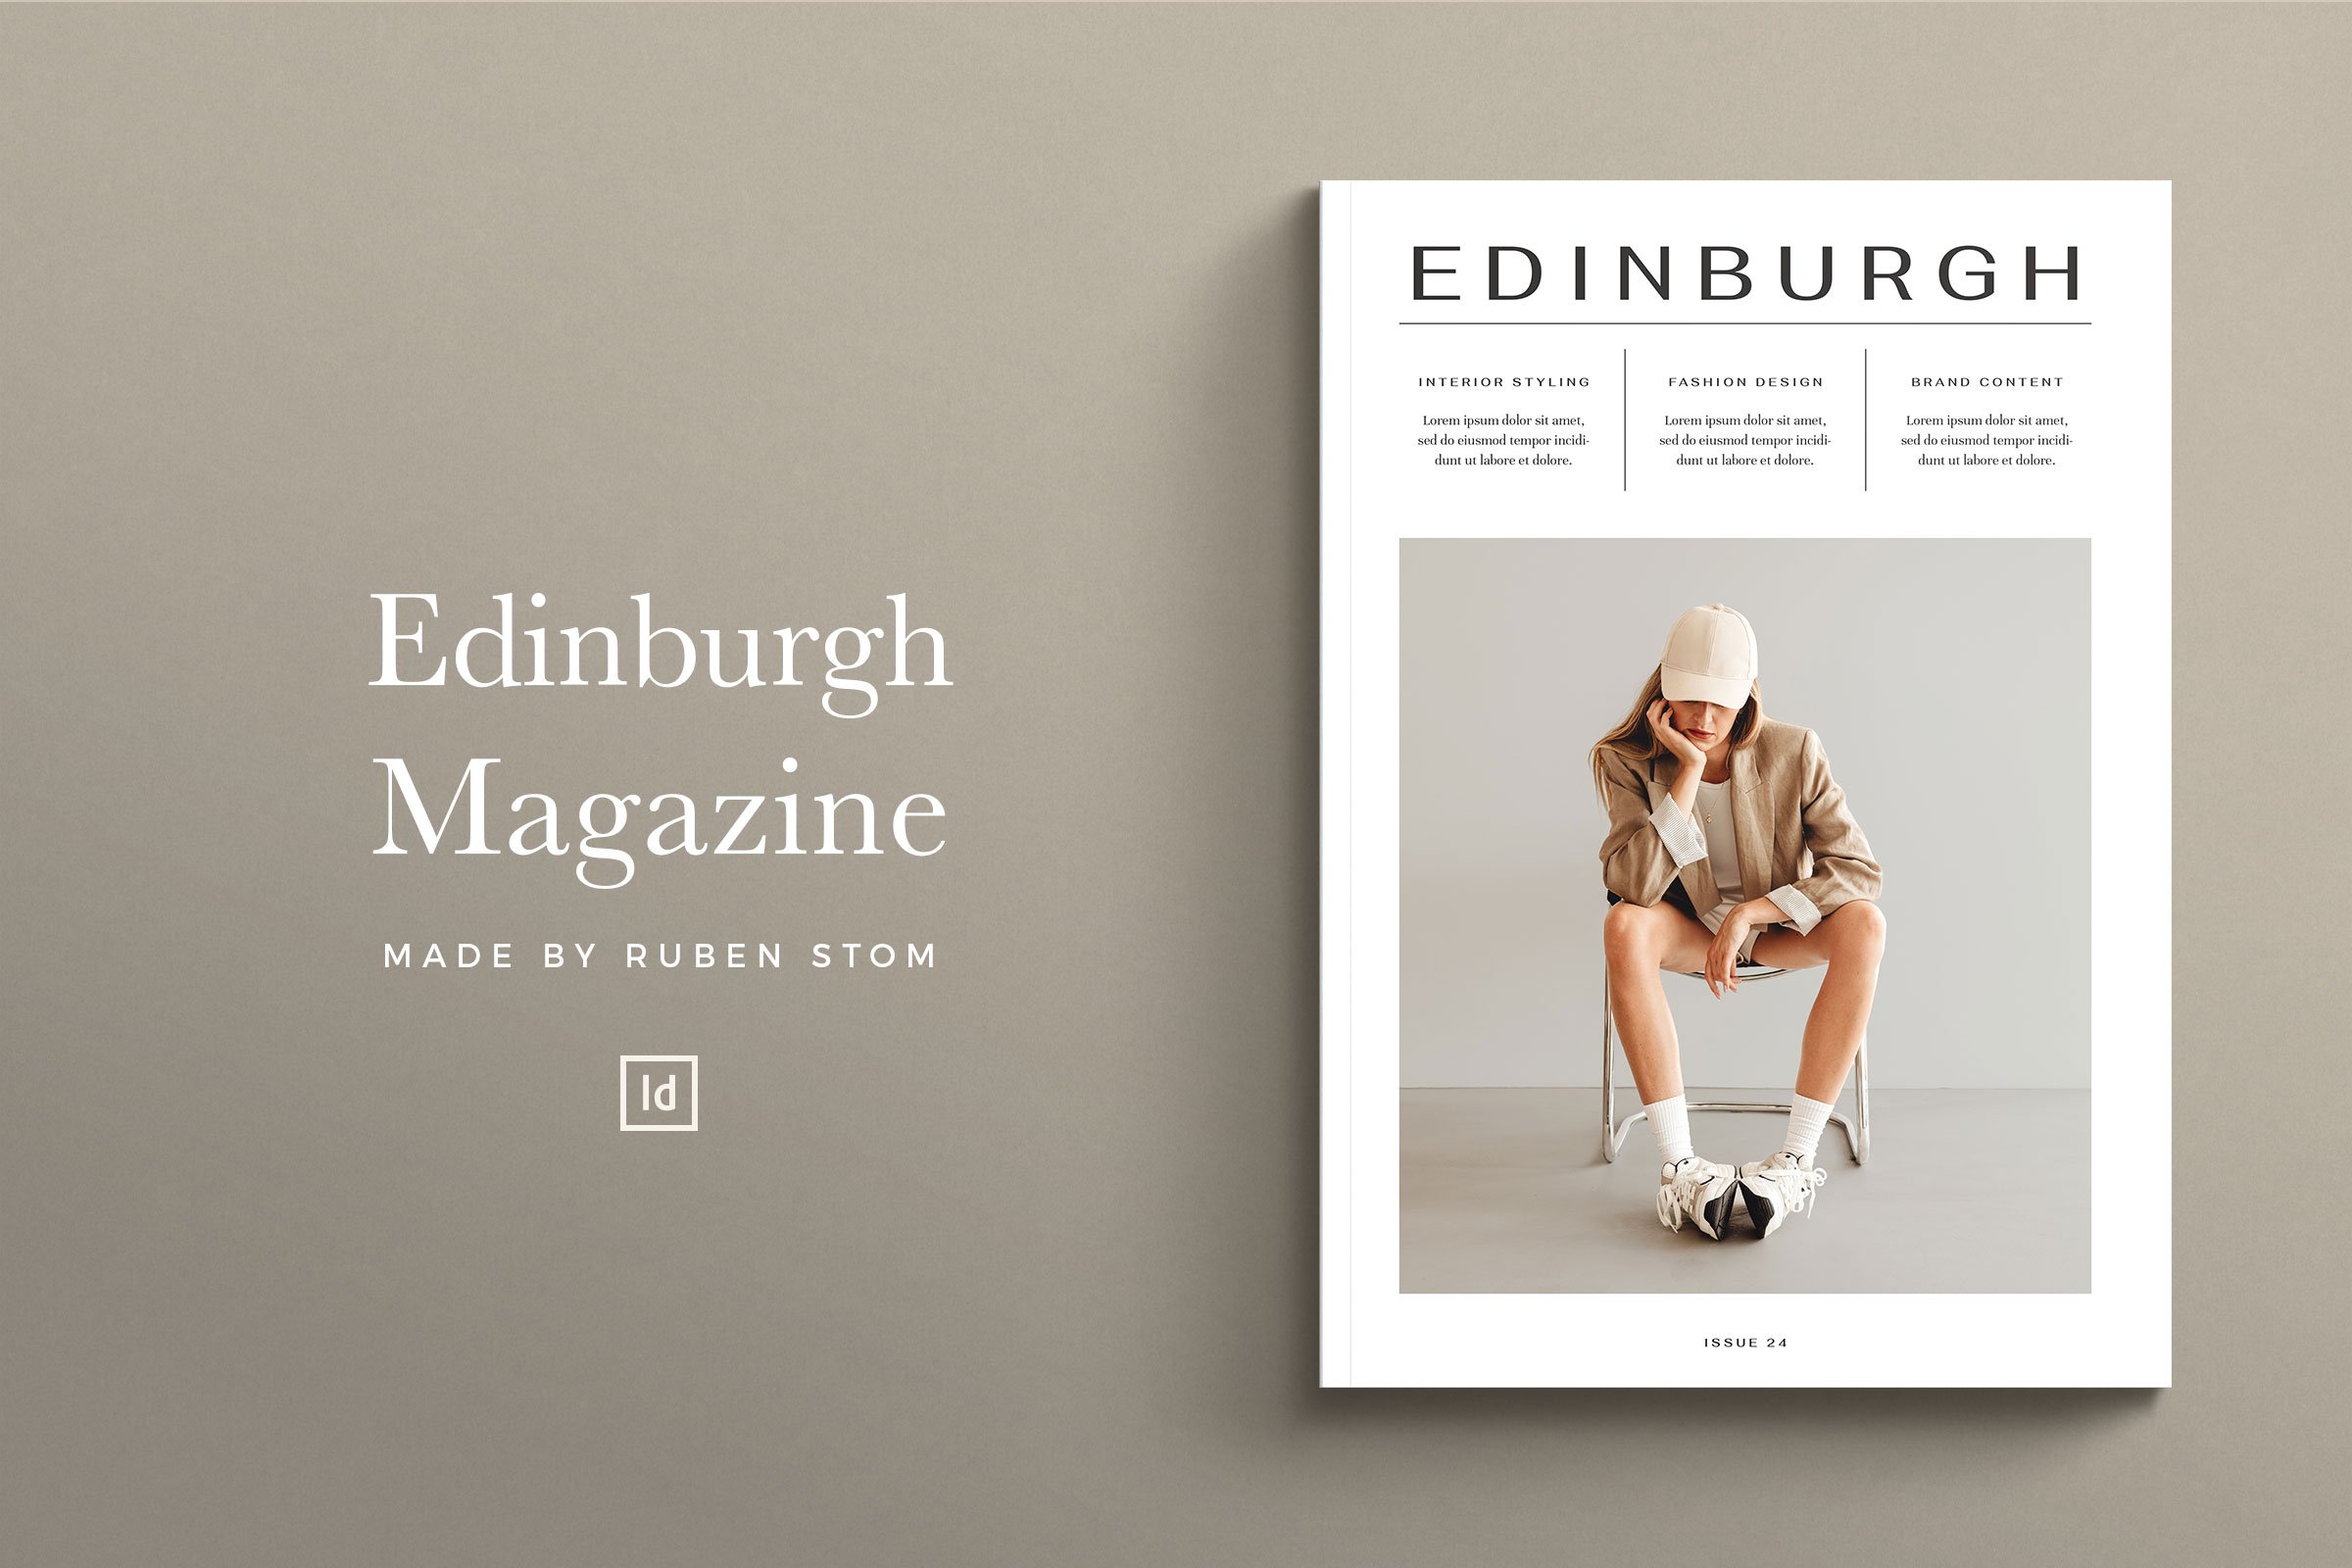 Edinburgh Magazine cover image.